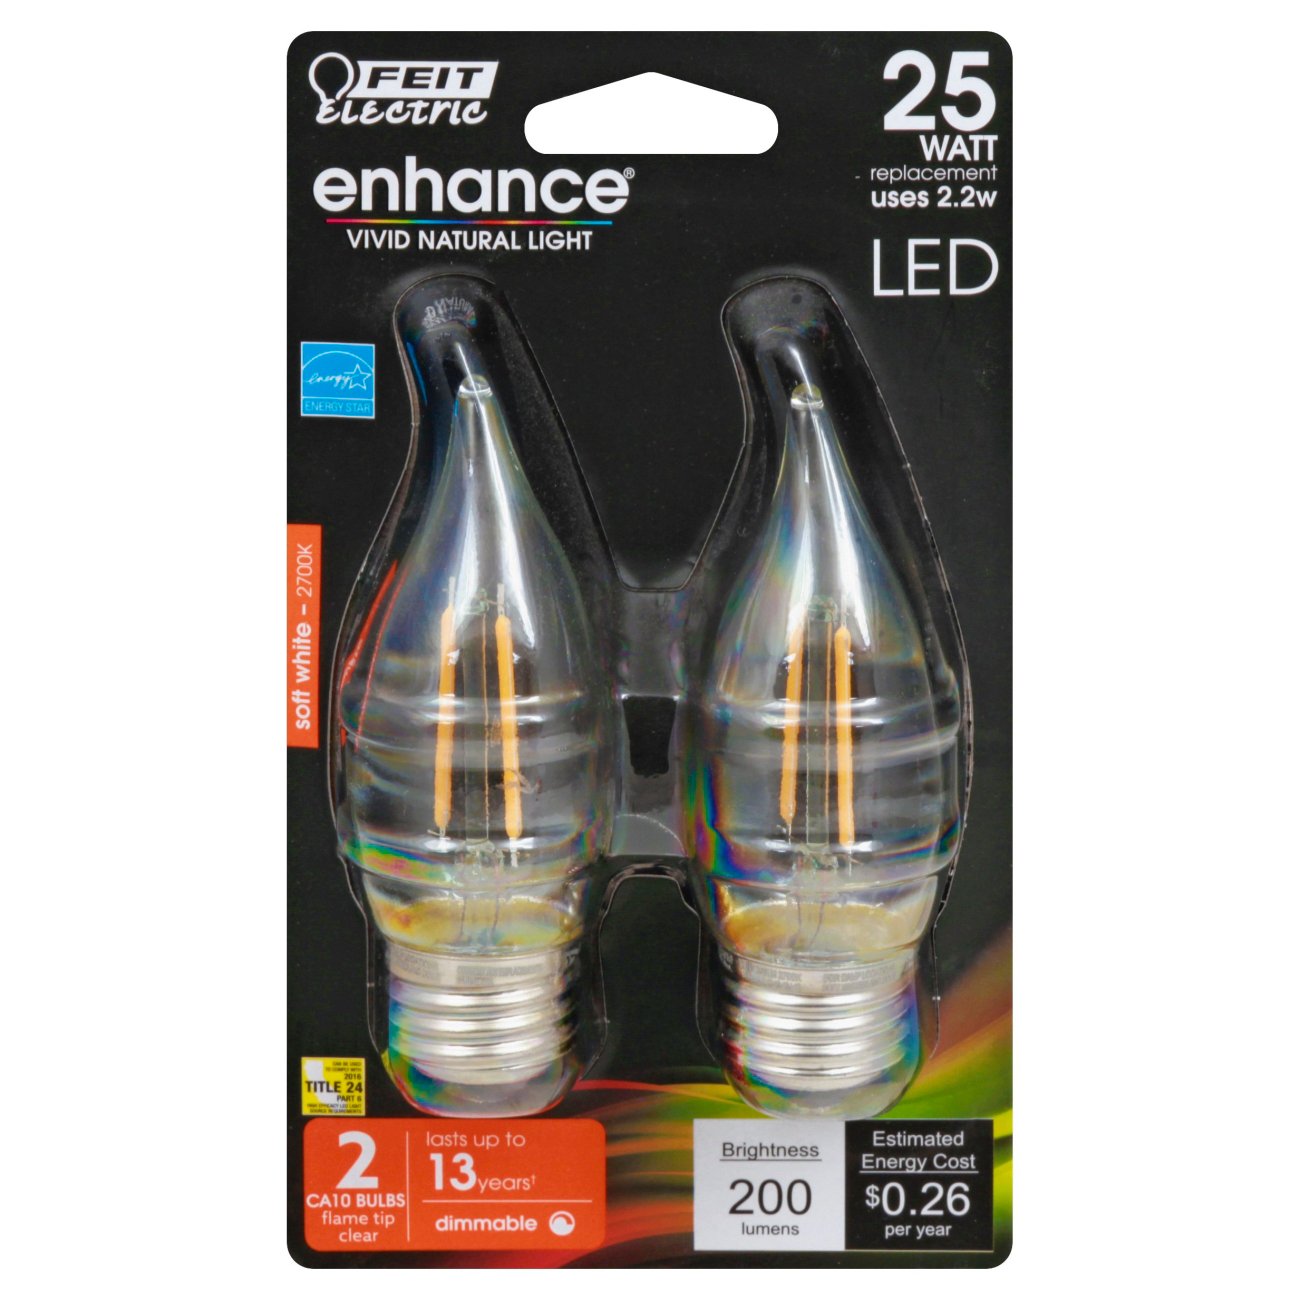 Garderobe moeder Fonkeling Feit Electric Enhance LED 25 Watt Soft White Flame Tip Filament Light Bulbs  - Shop Home Improvement at H-E-B